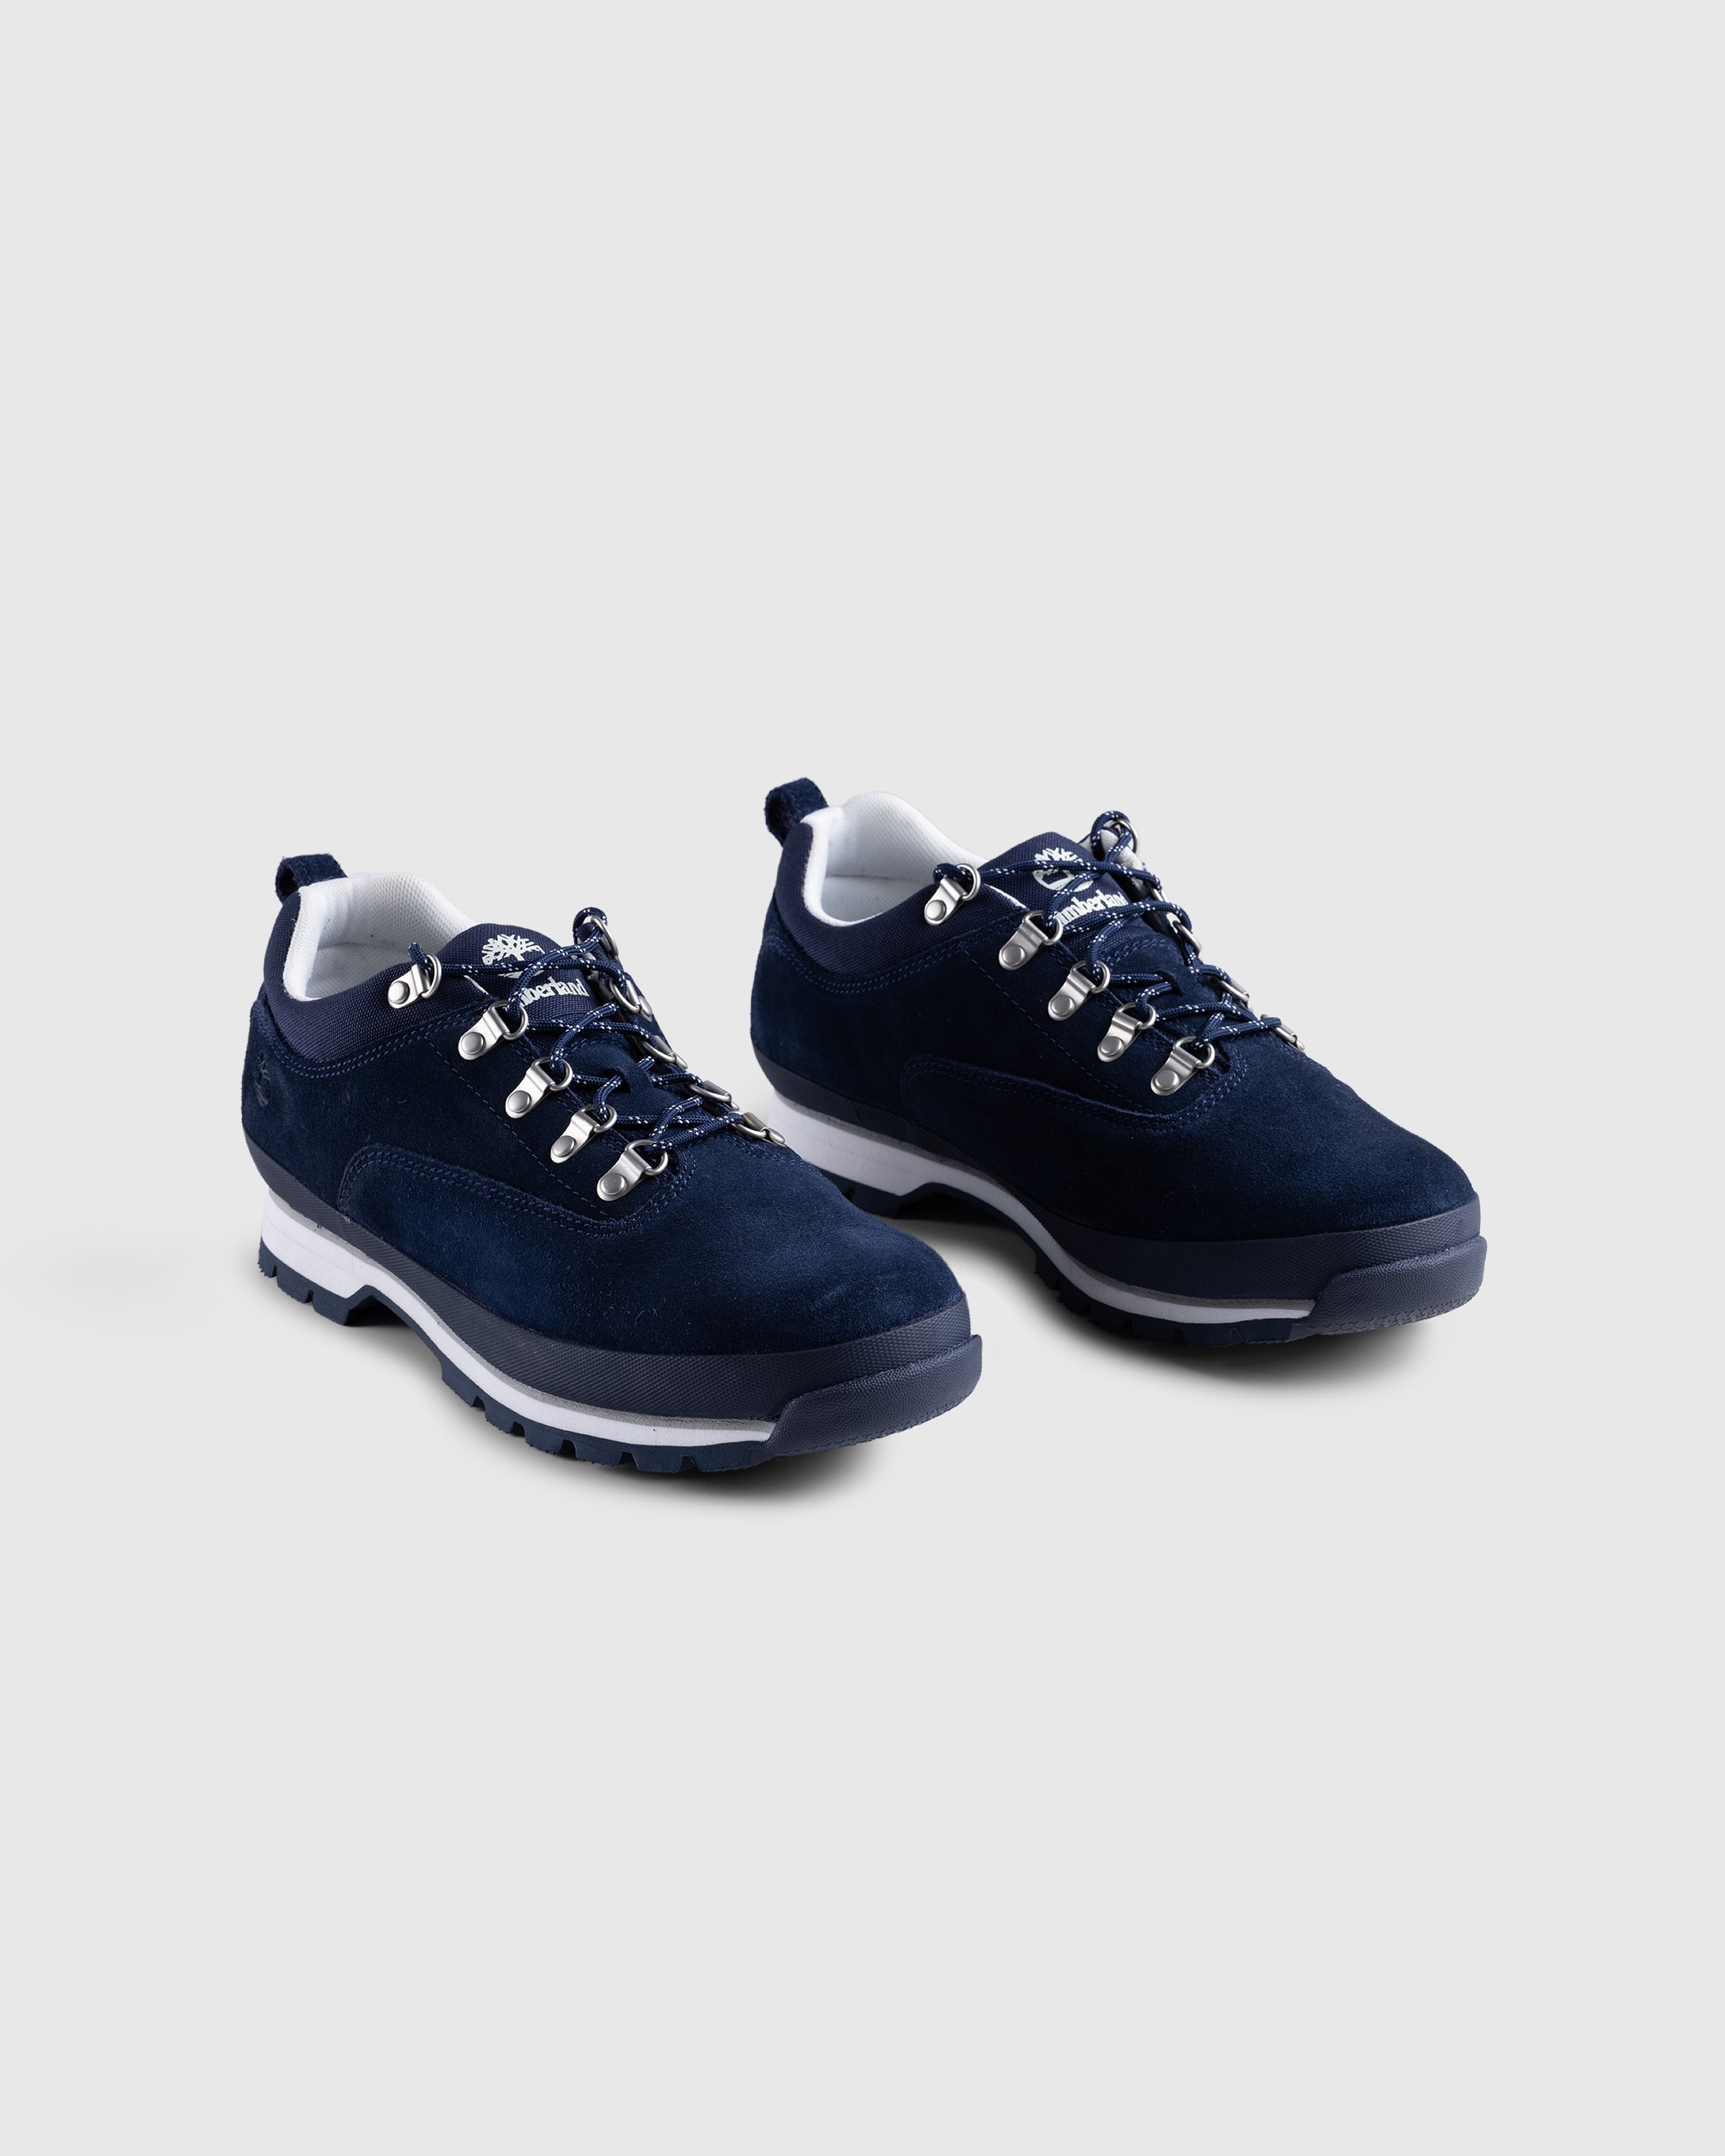 Timberland - Euro Hiker Low Navy - Footwear - Blue - Image 3